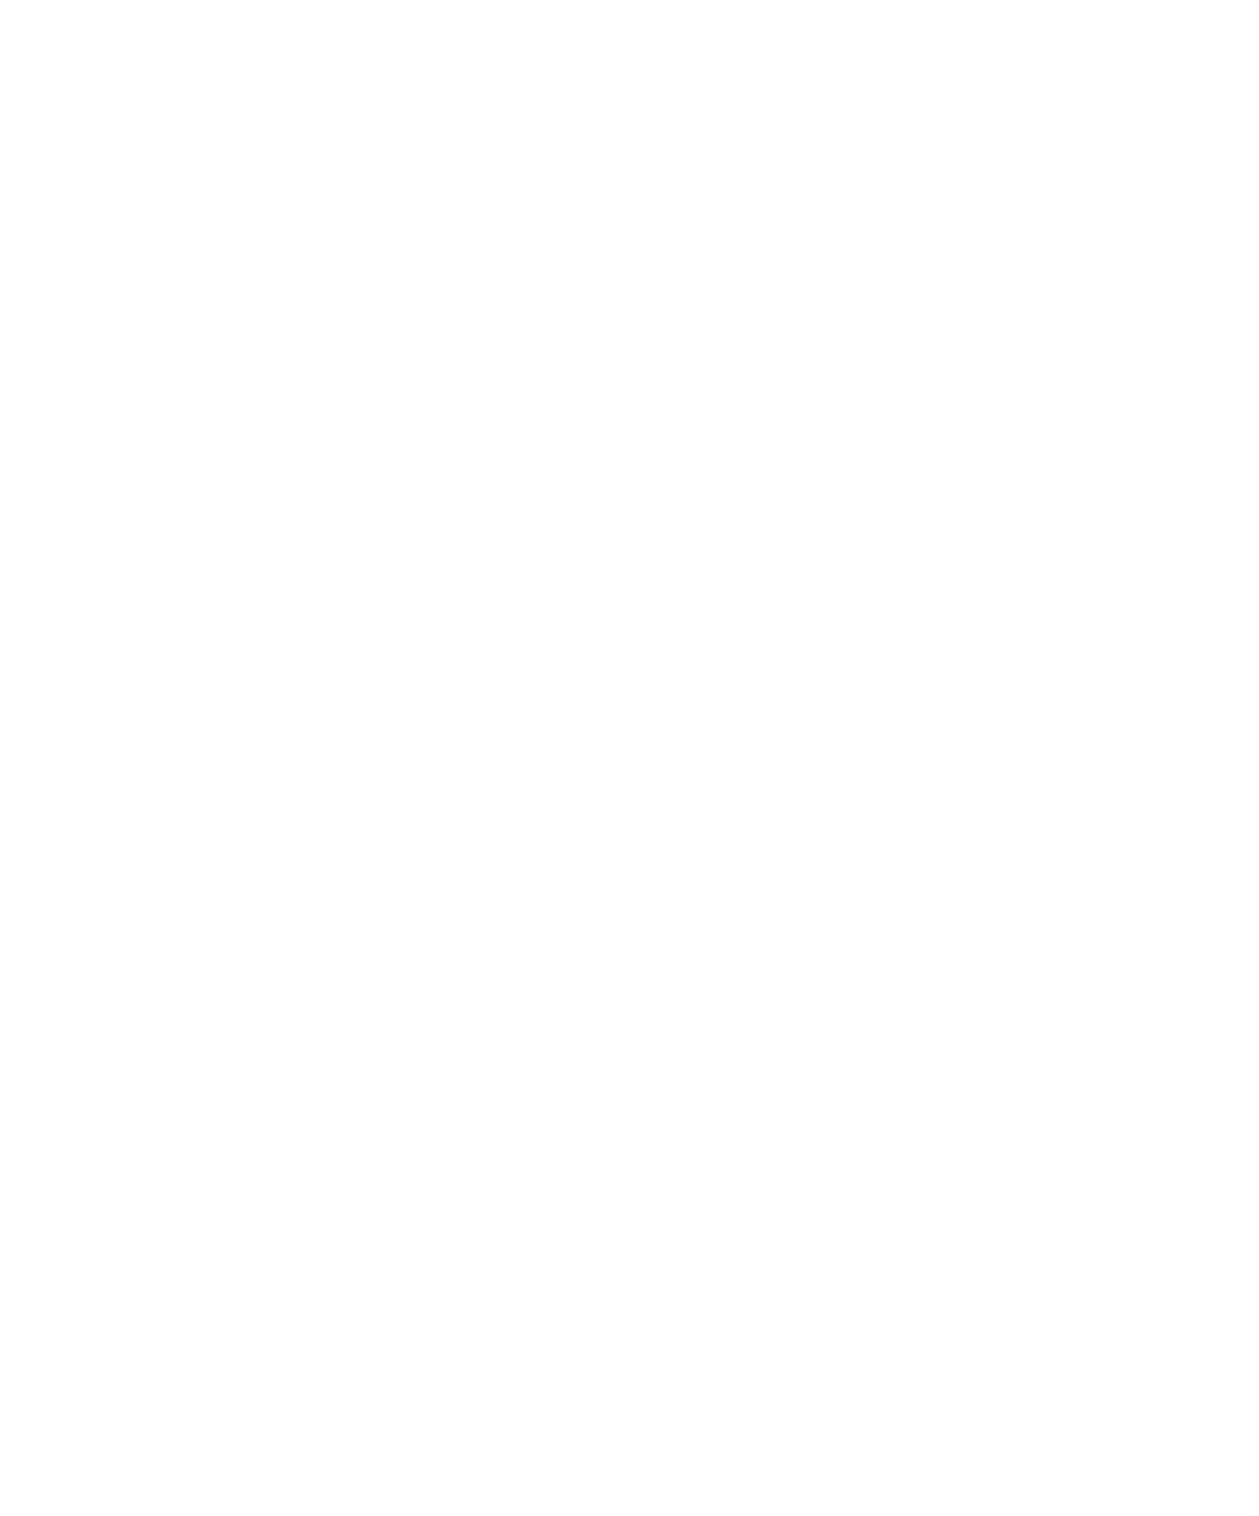 Betsson AB logo for dark backgrounds (transparent PNG)